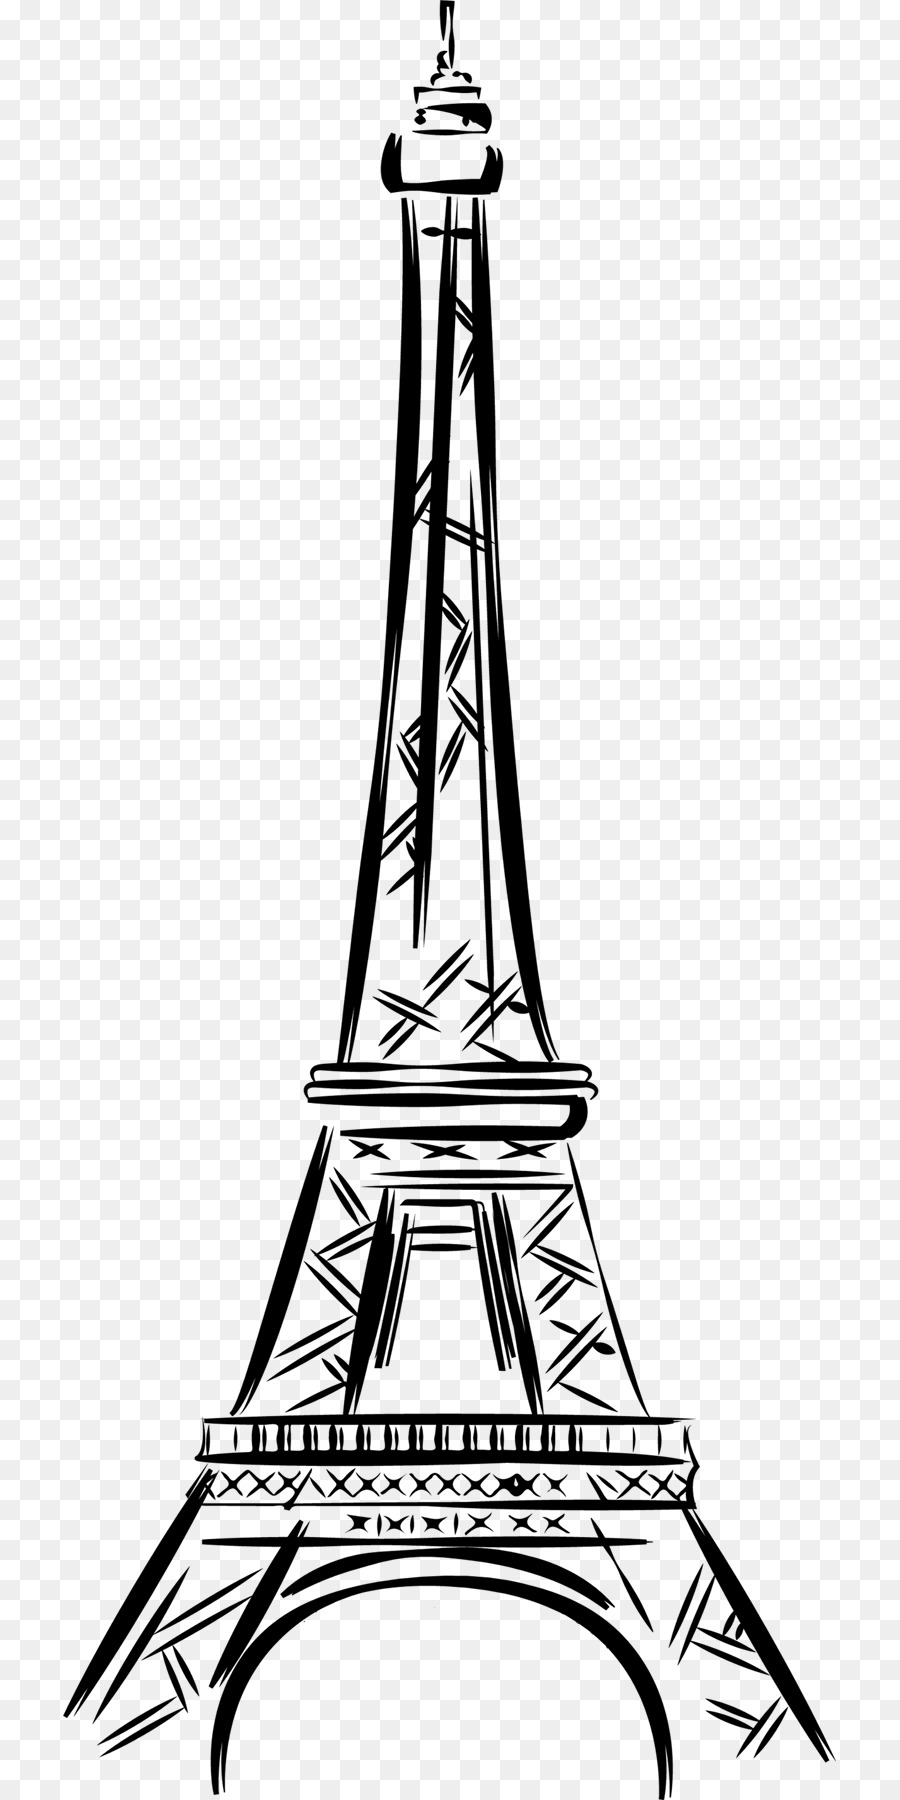 Eiffel Tower, Paris. Hand drawn marker sketch - Stock Illustration  [61251441] - PIXTA